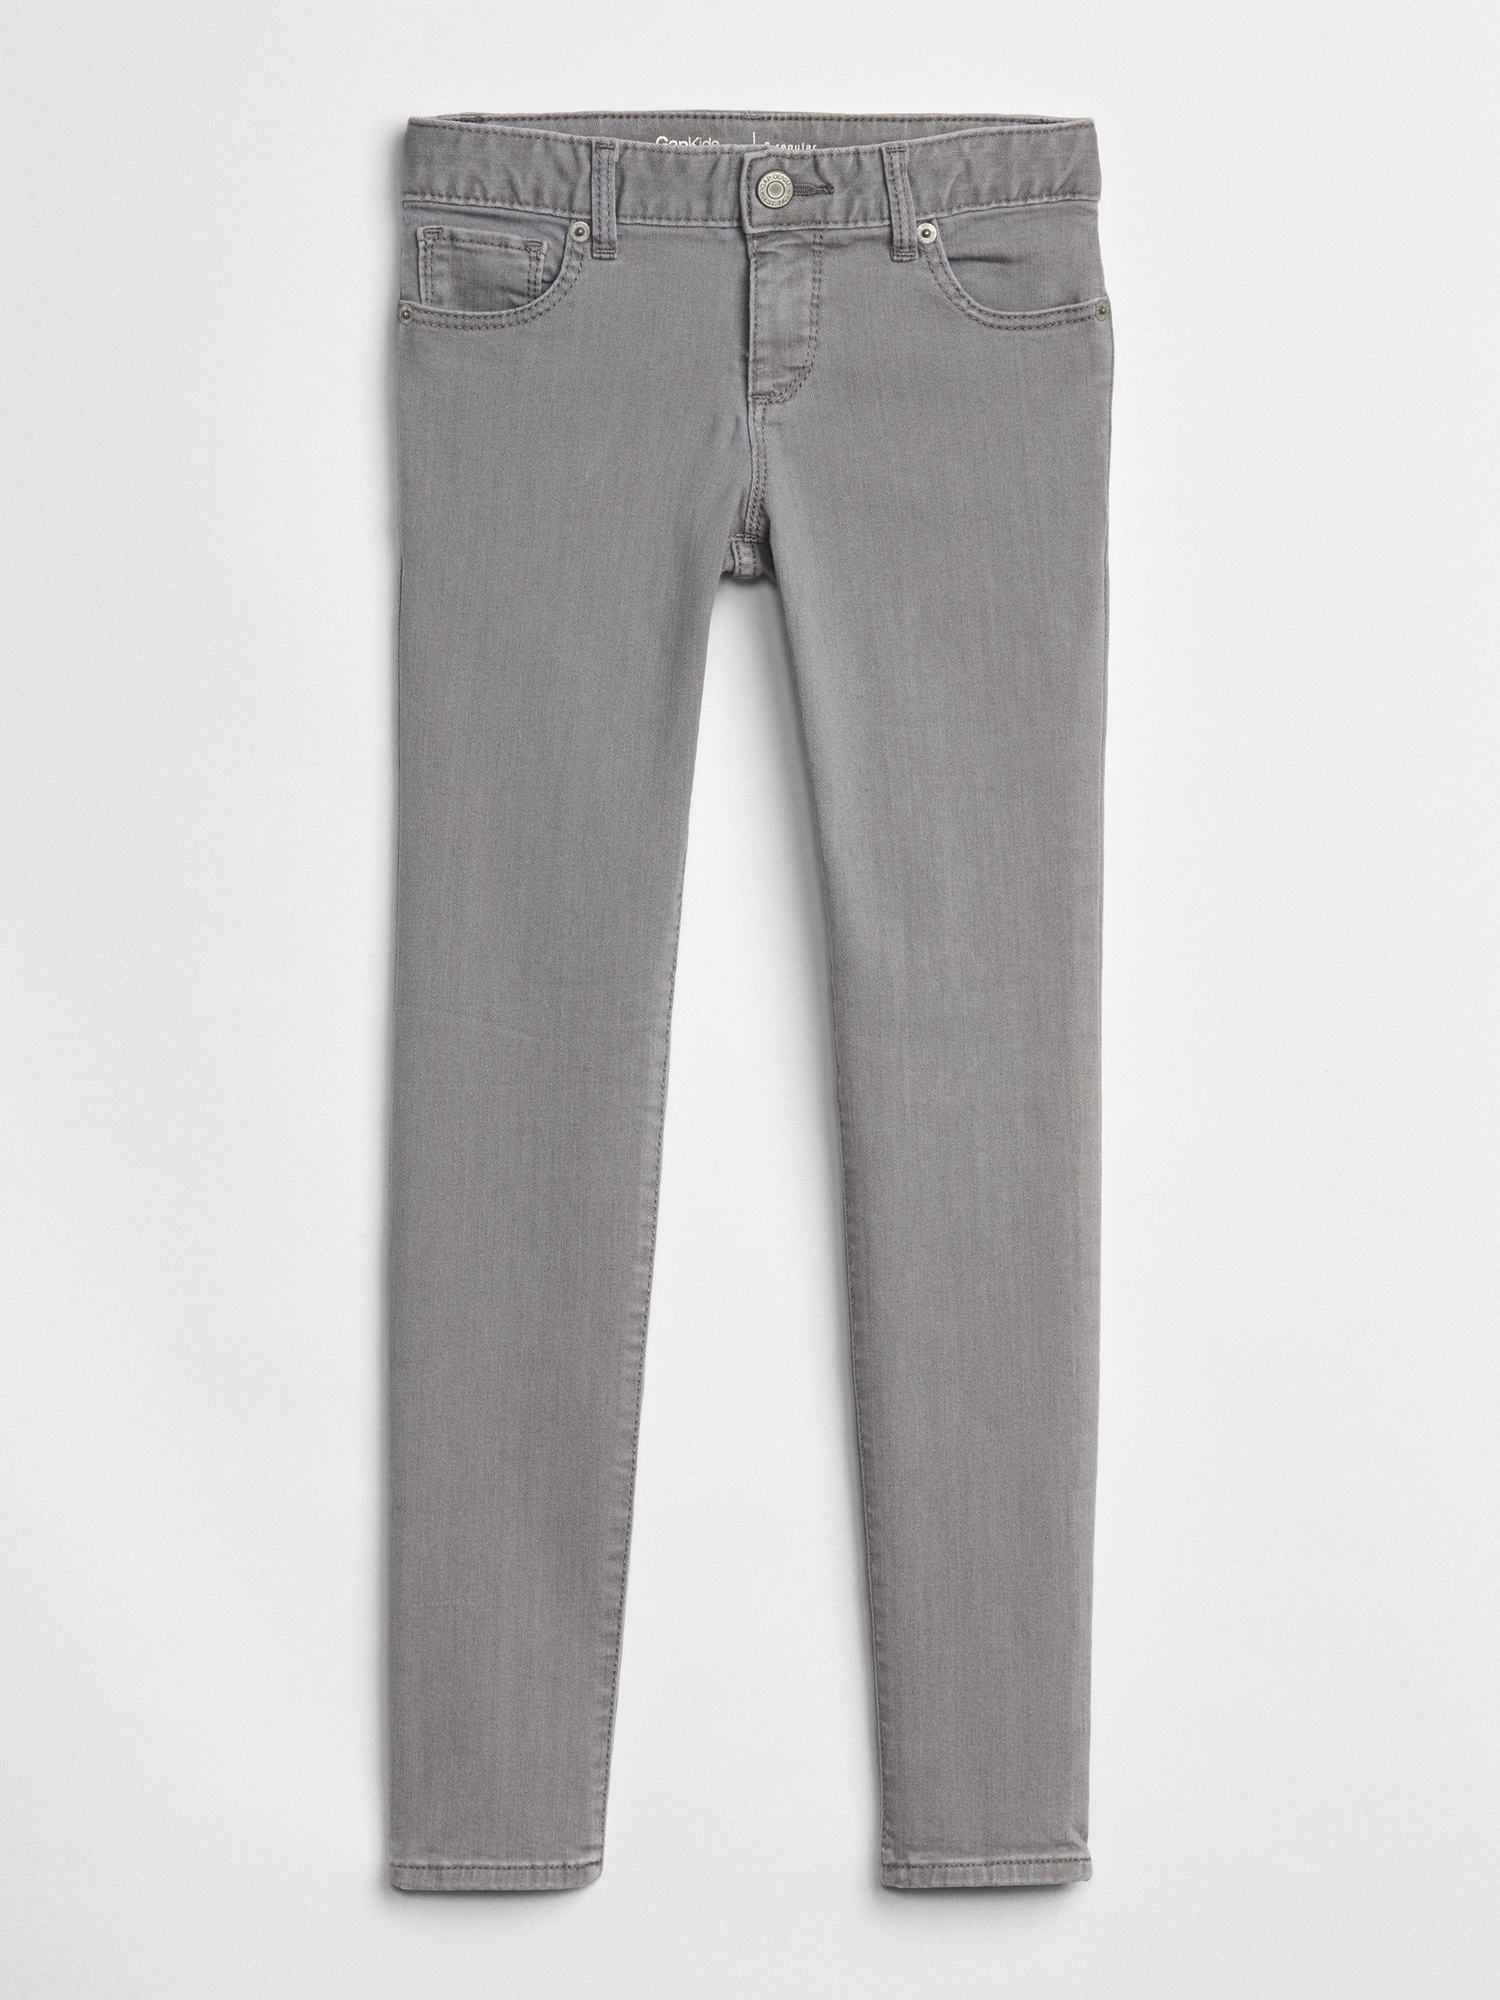 grey jeans kids